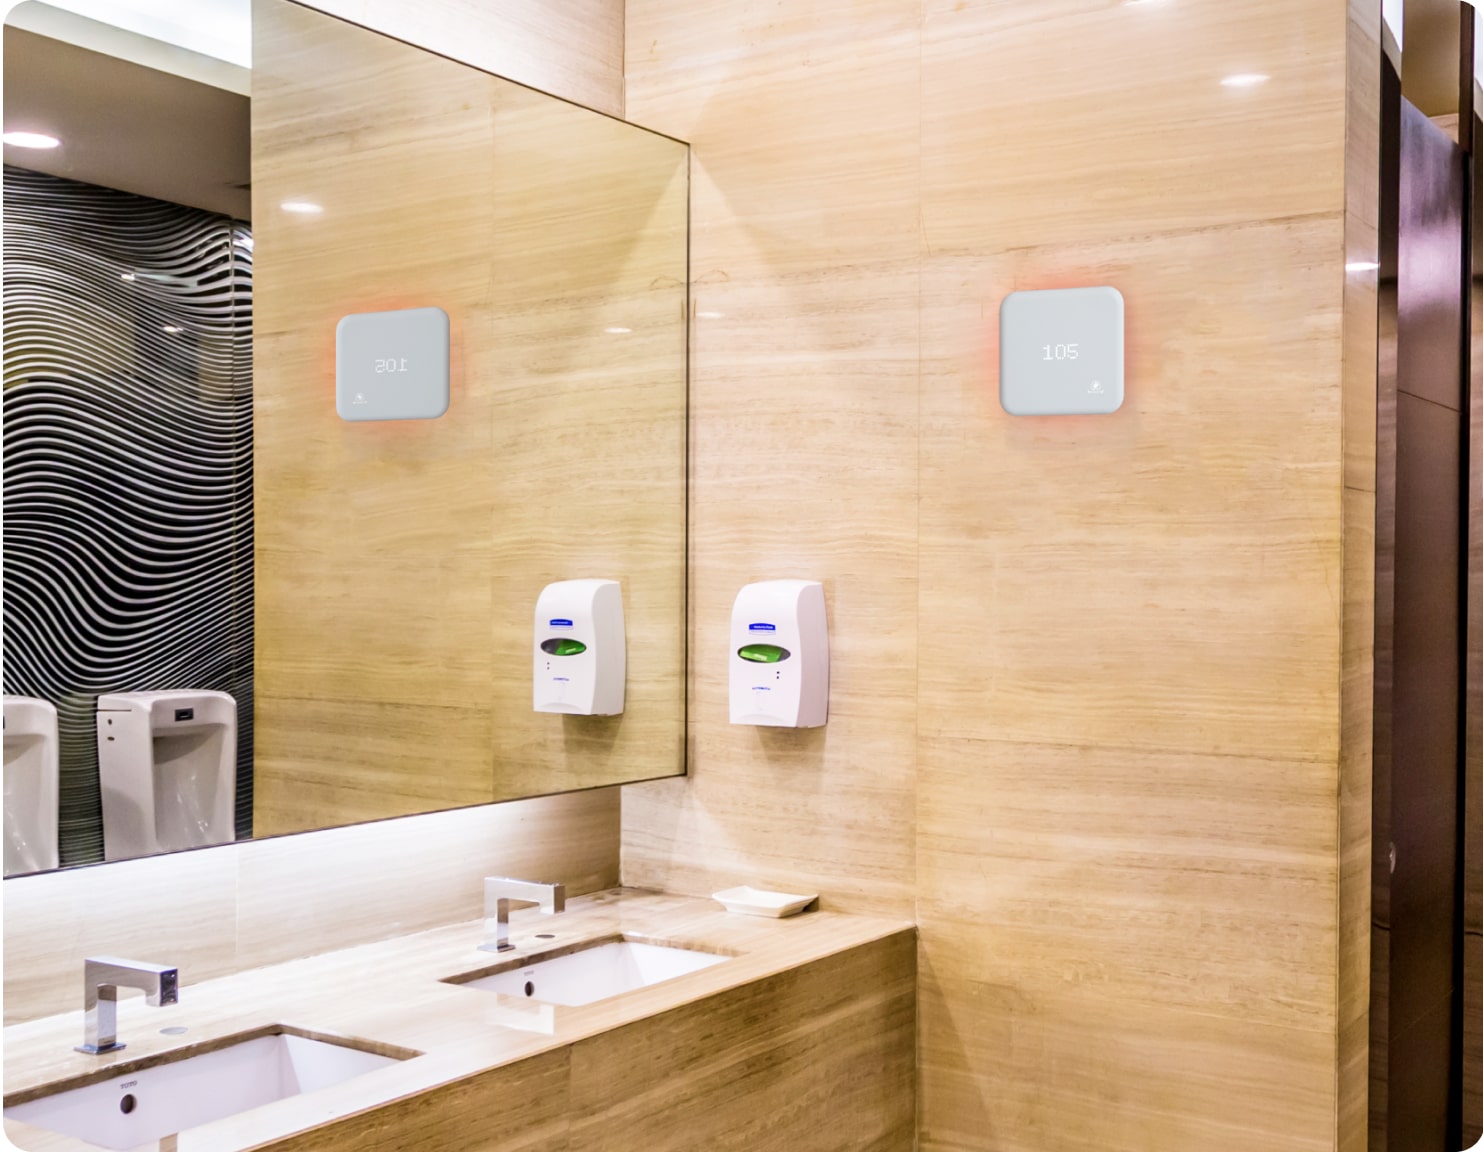 prana air squair air quality monitor for washroom and bathroom